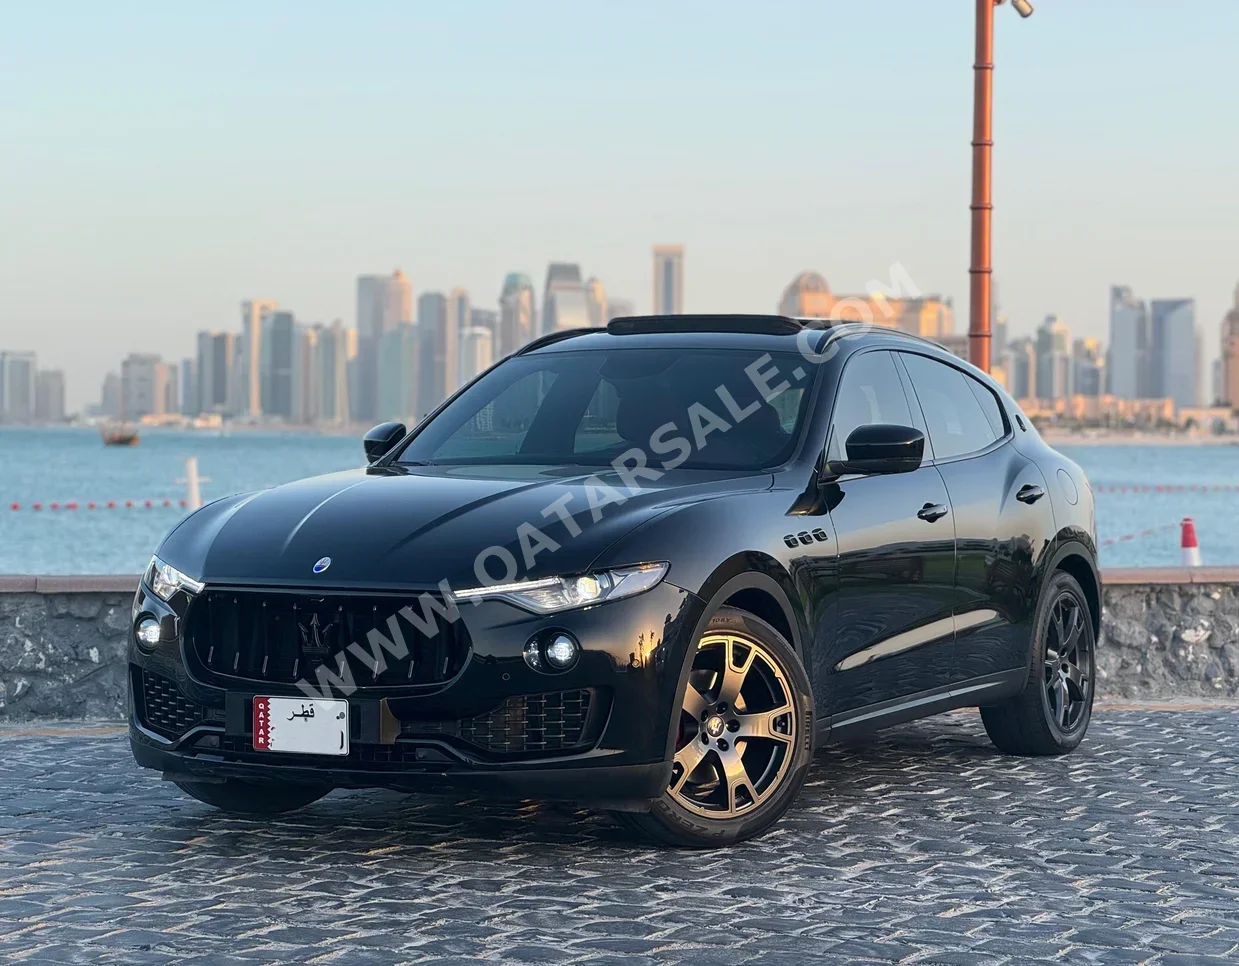  Maserati  Levante  2018  Automatic  72,000 Km  6 Cylinder  Four Wheel Drive (4WD)  SUV  Black  With Warranty